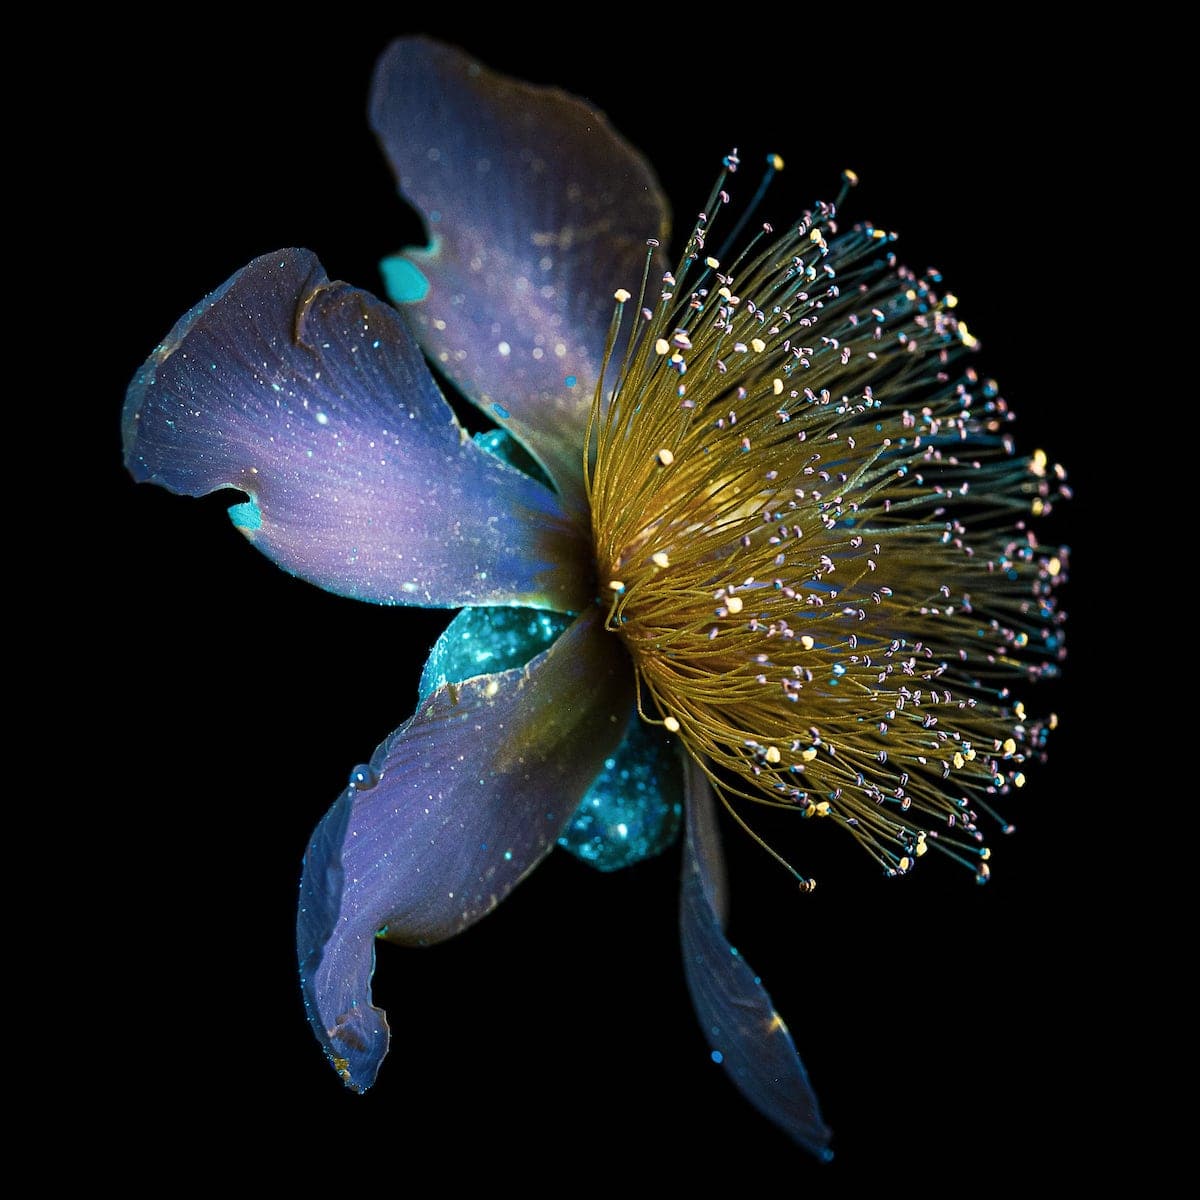 Flower Photography by Debora Lombardi